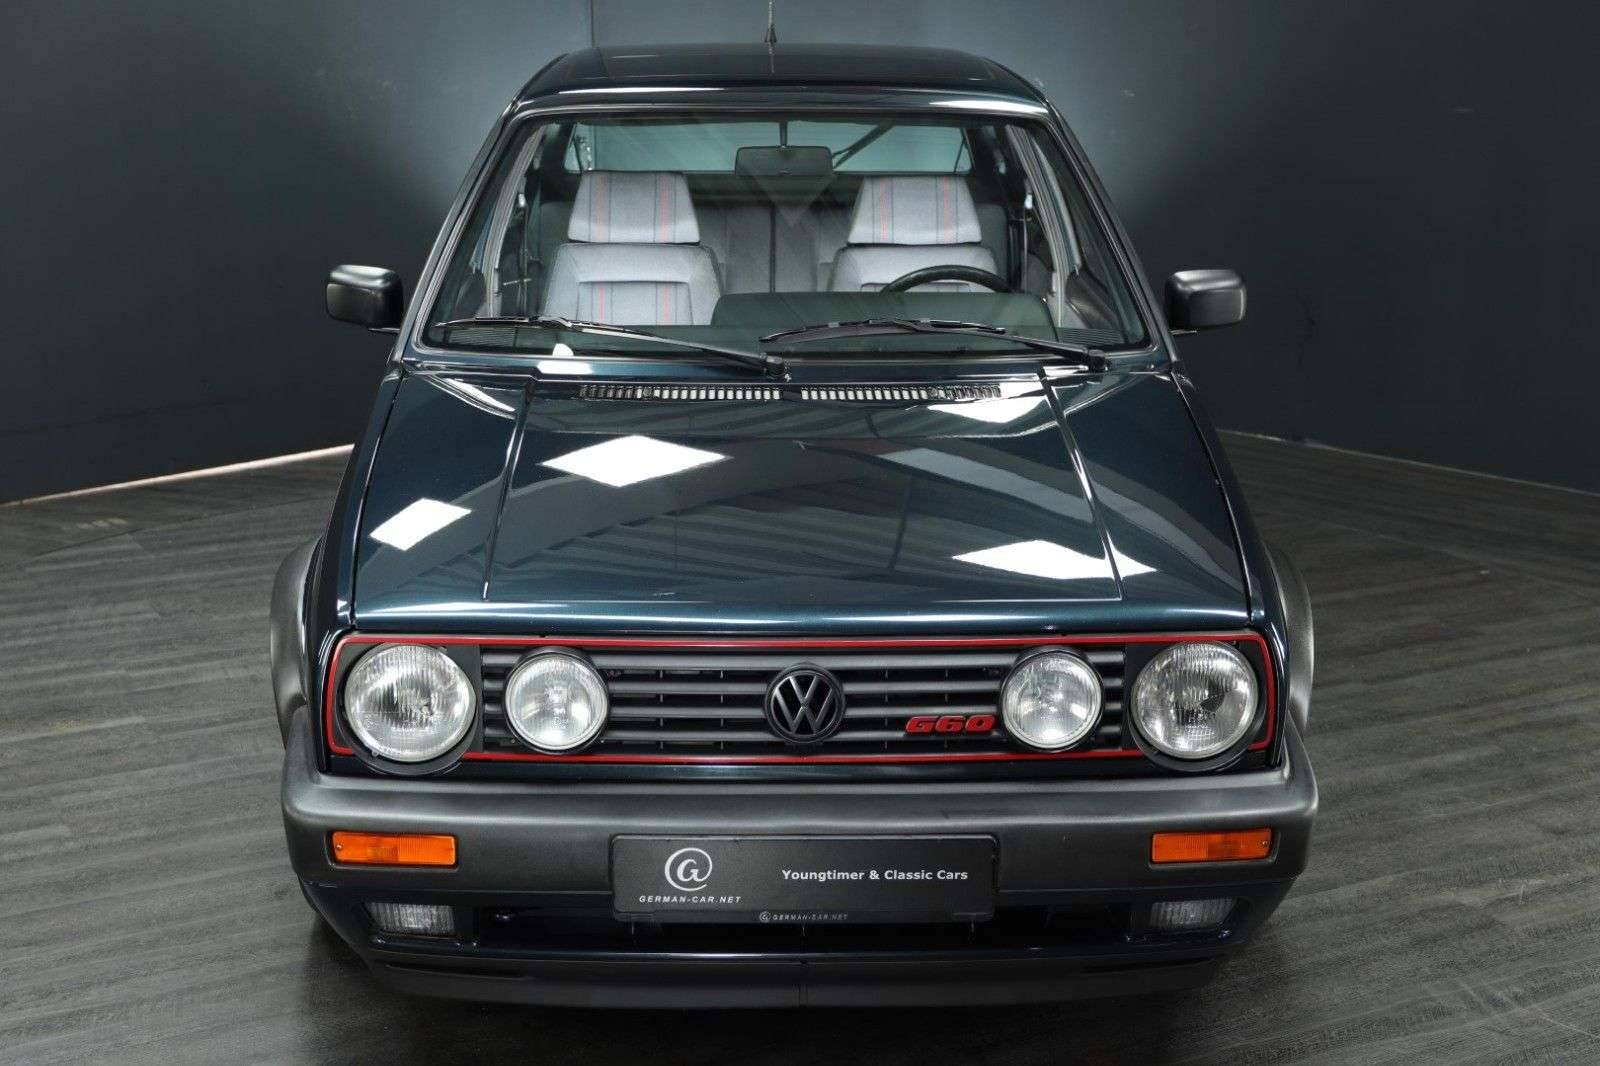 For Sale: Volkswagen Golf Mk II GTi G60 1.8 (1990) offered for €33,900